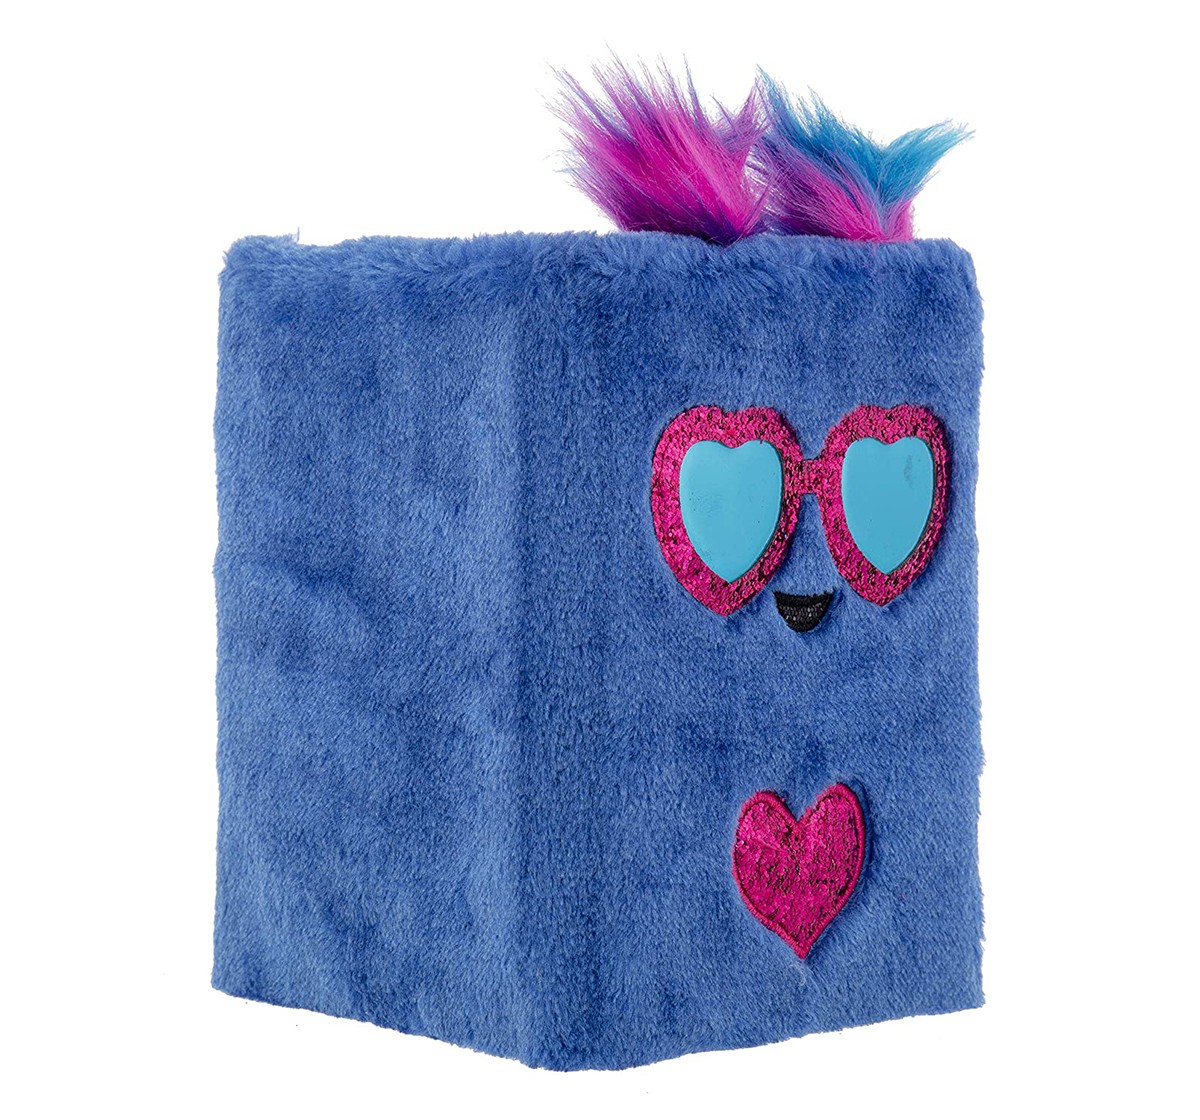 Mirada Blue Owl Journal for kids 10Y+ (Multicolor)